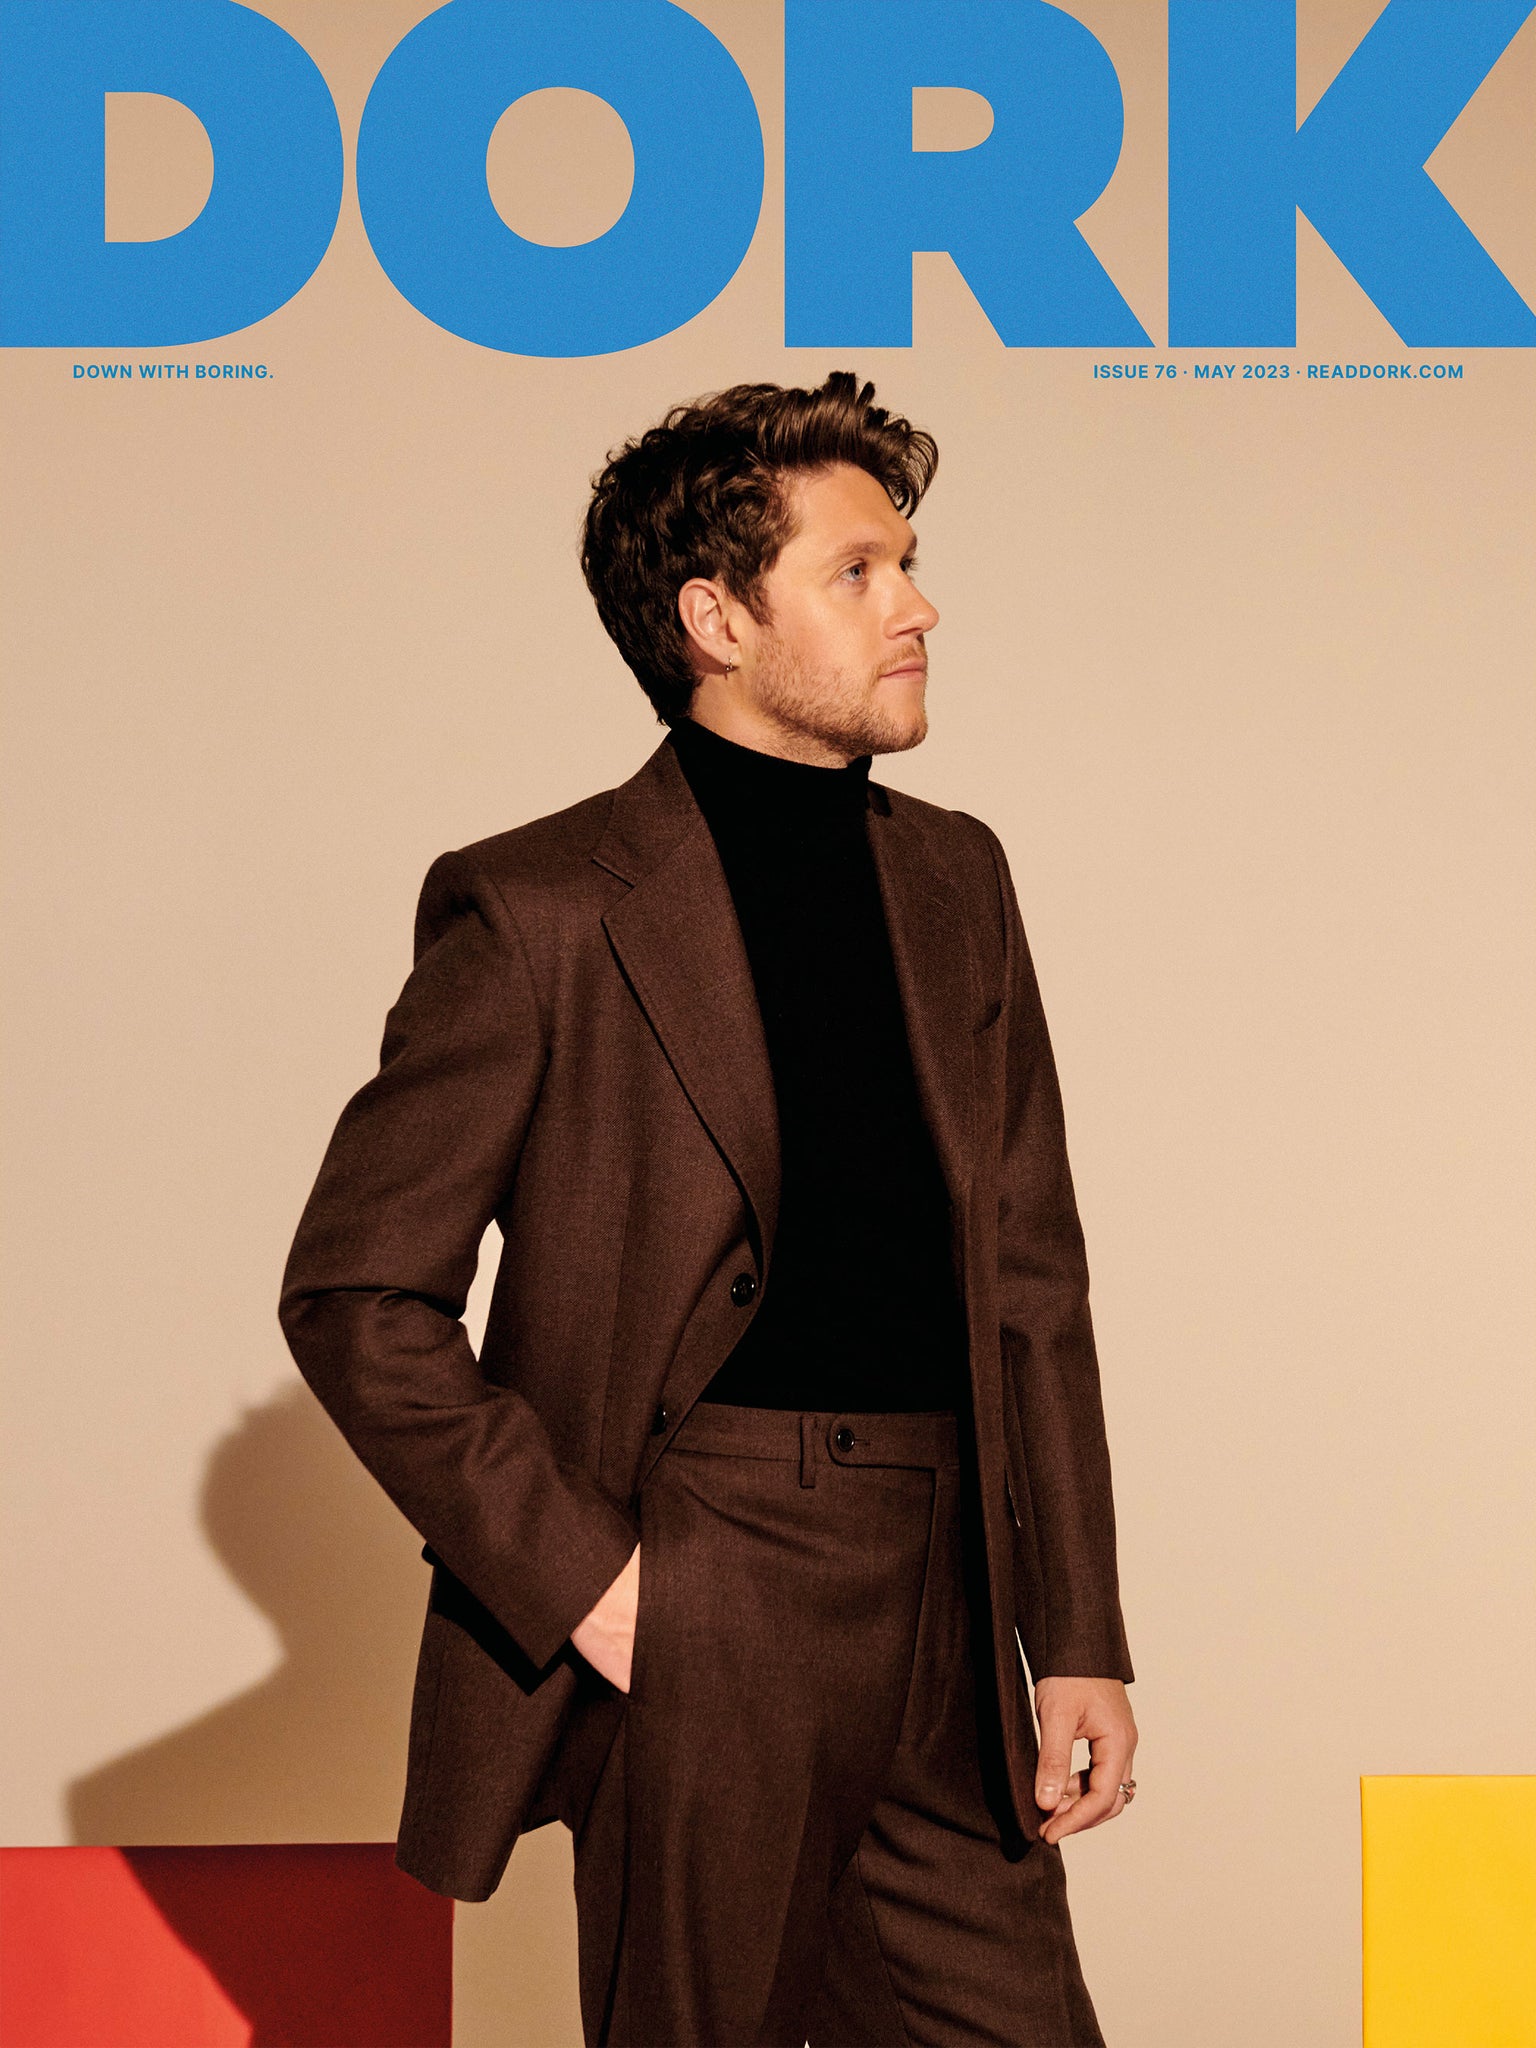 Dork, May 2023 (Niall Horan cover)